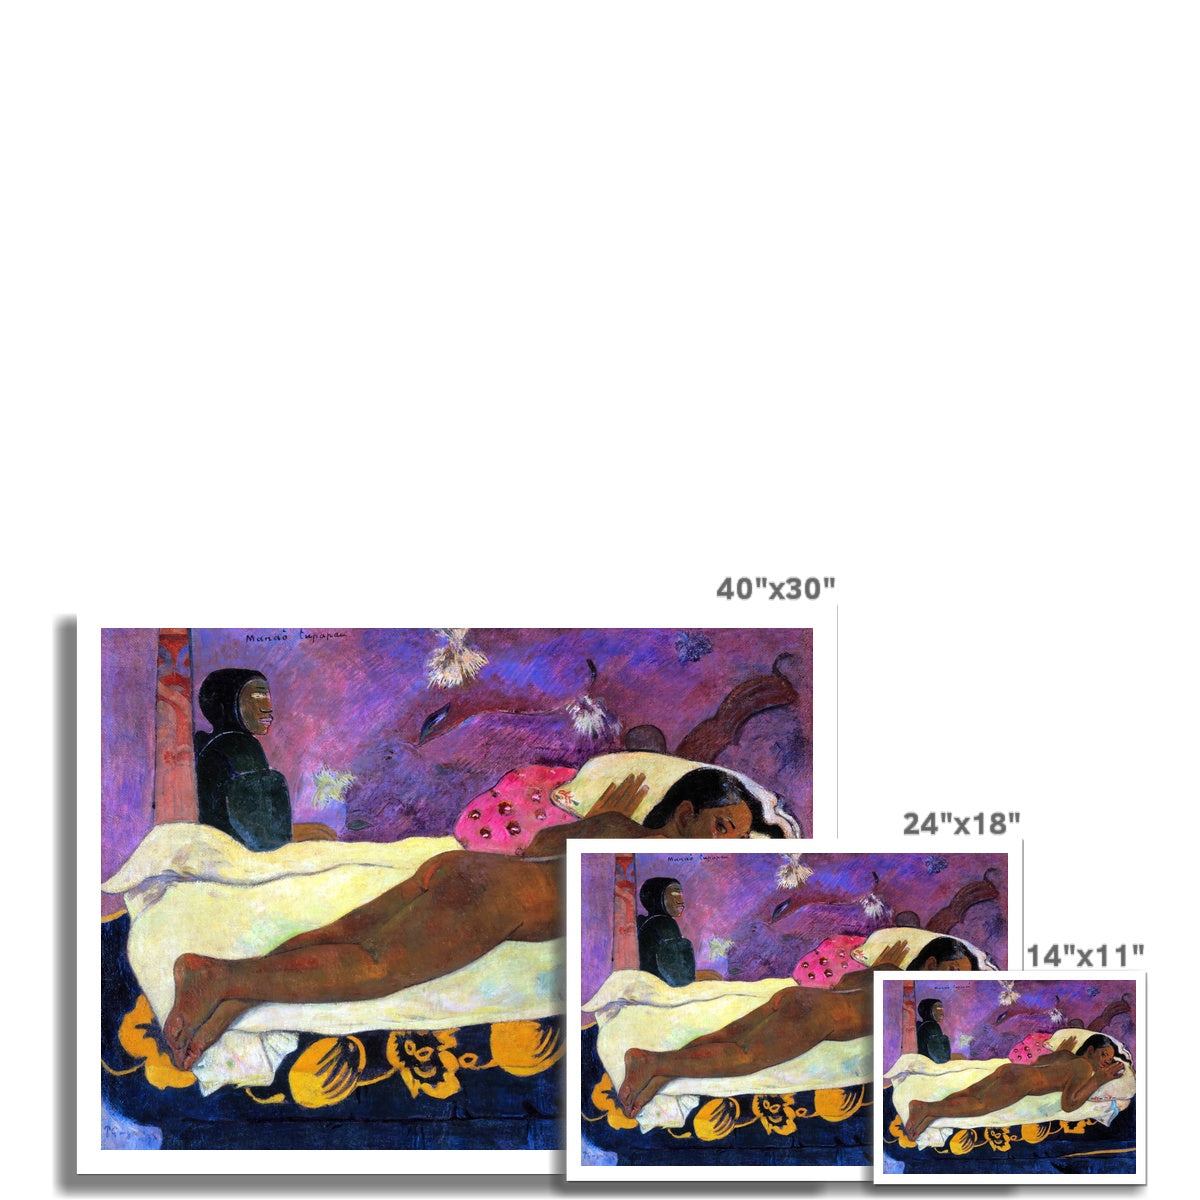 'Manao Tupapau', Spirit of the Dead by Paul Gauguin. Open Edition Fine Art Print. Art Gallery Historic Art